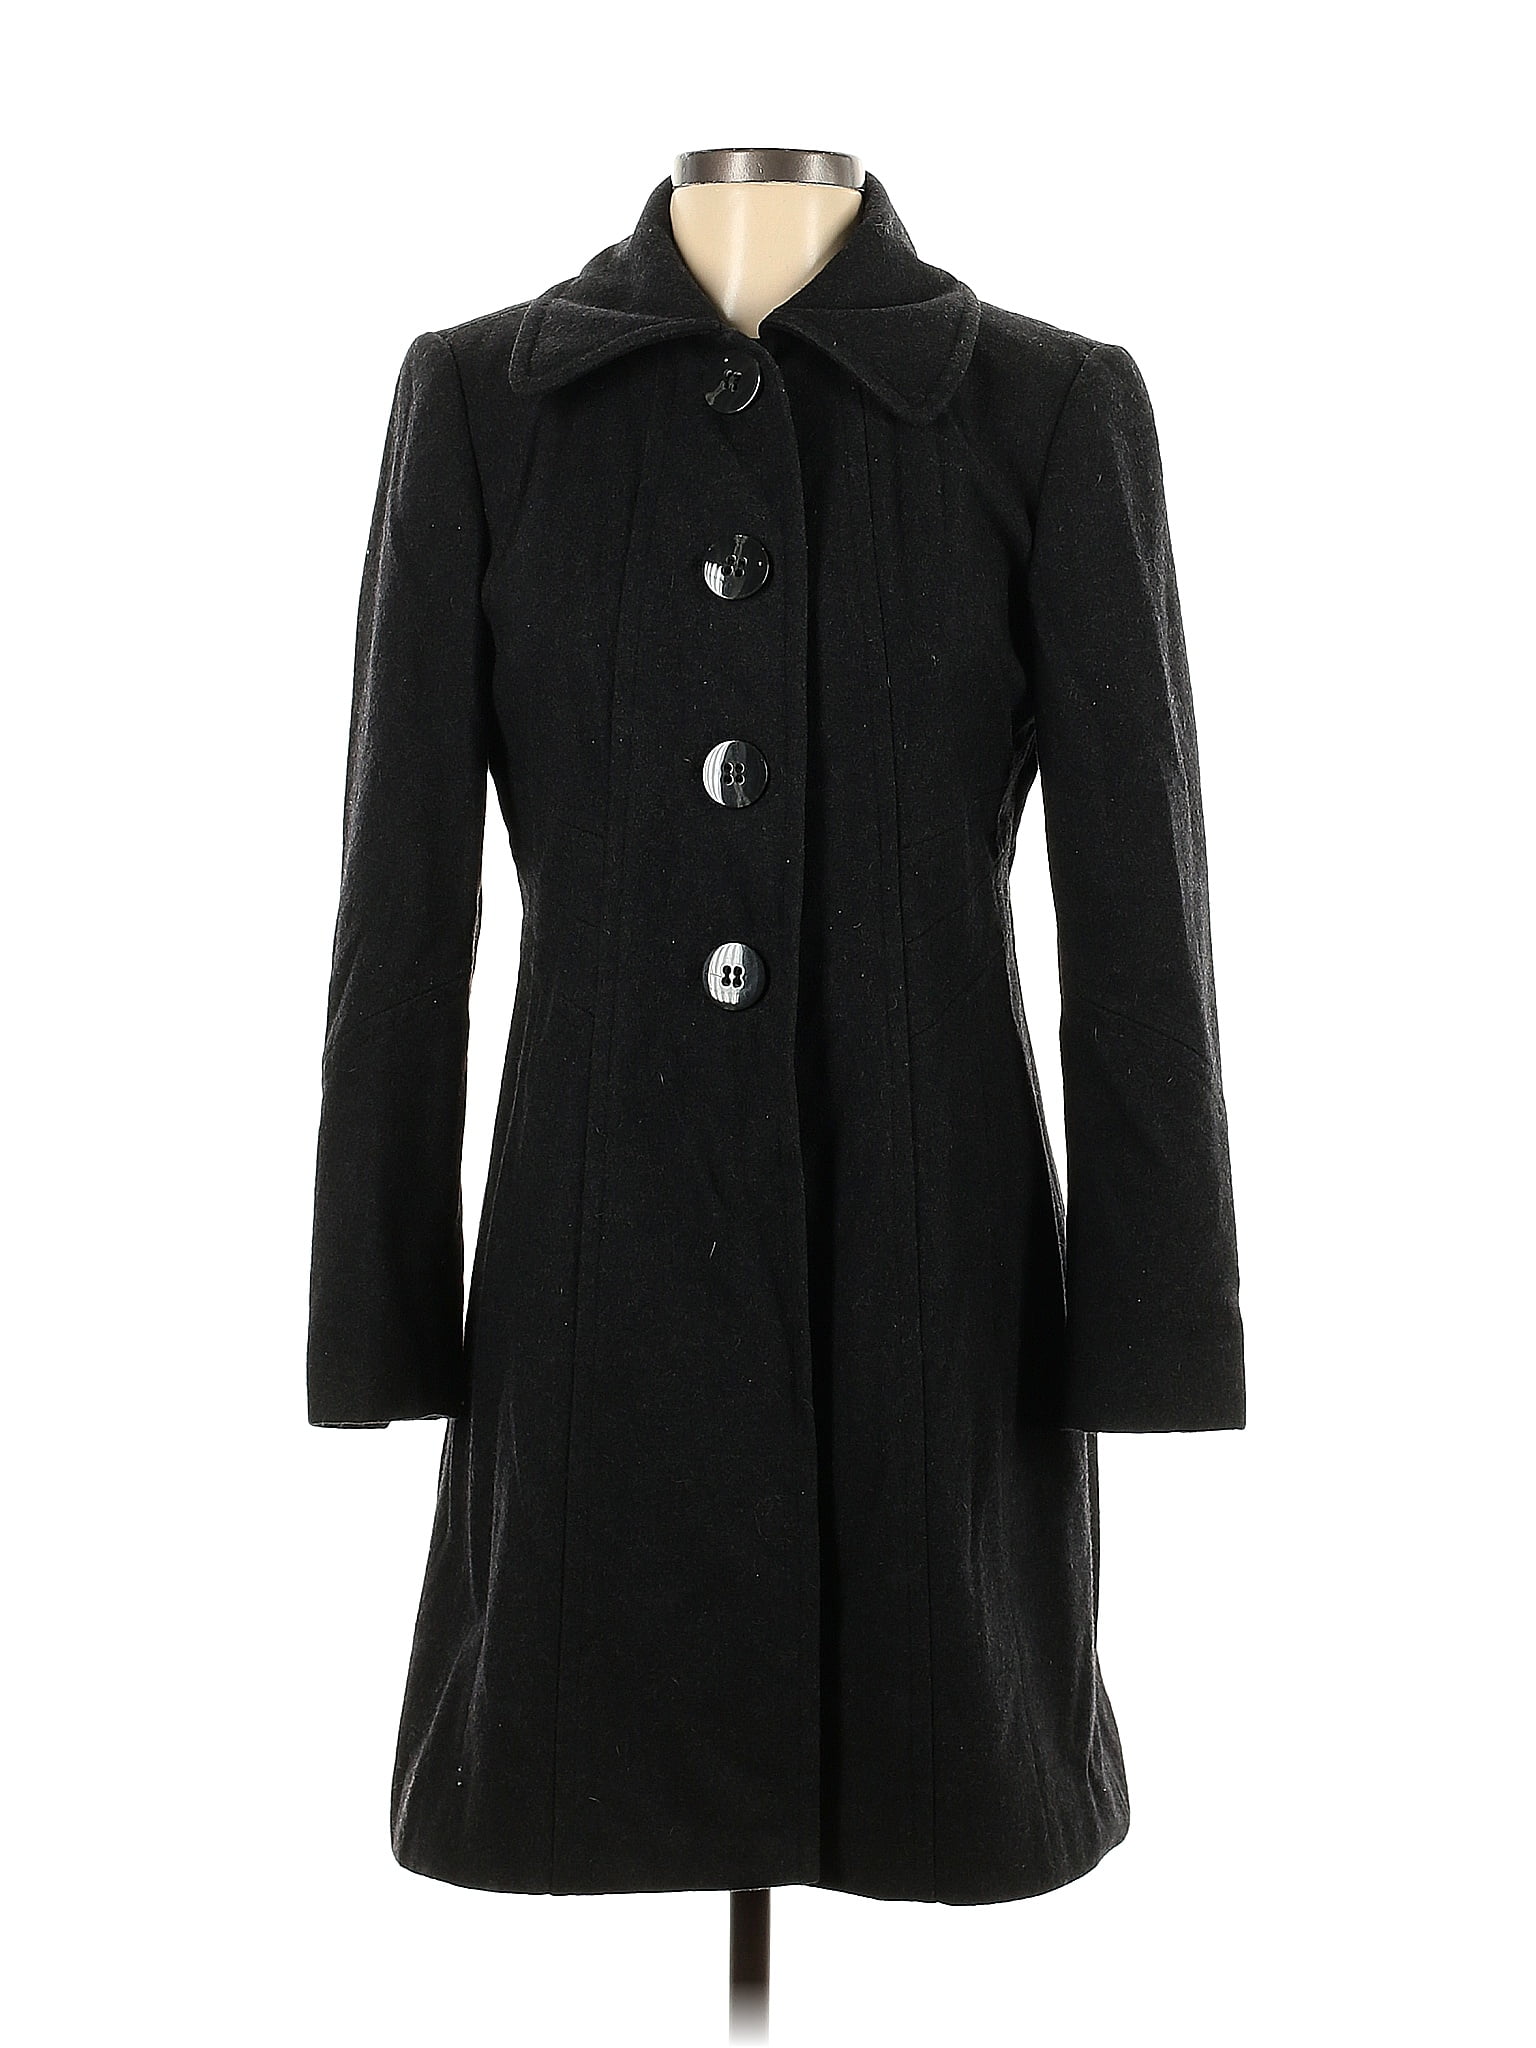 Larry Levine Solid Black Wool Coat Size 4 (Petite) - 66% off